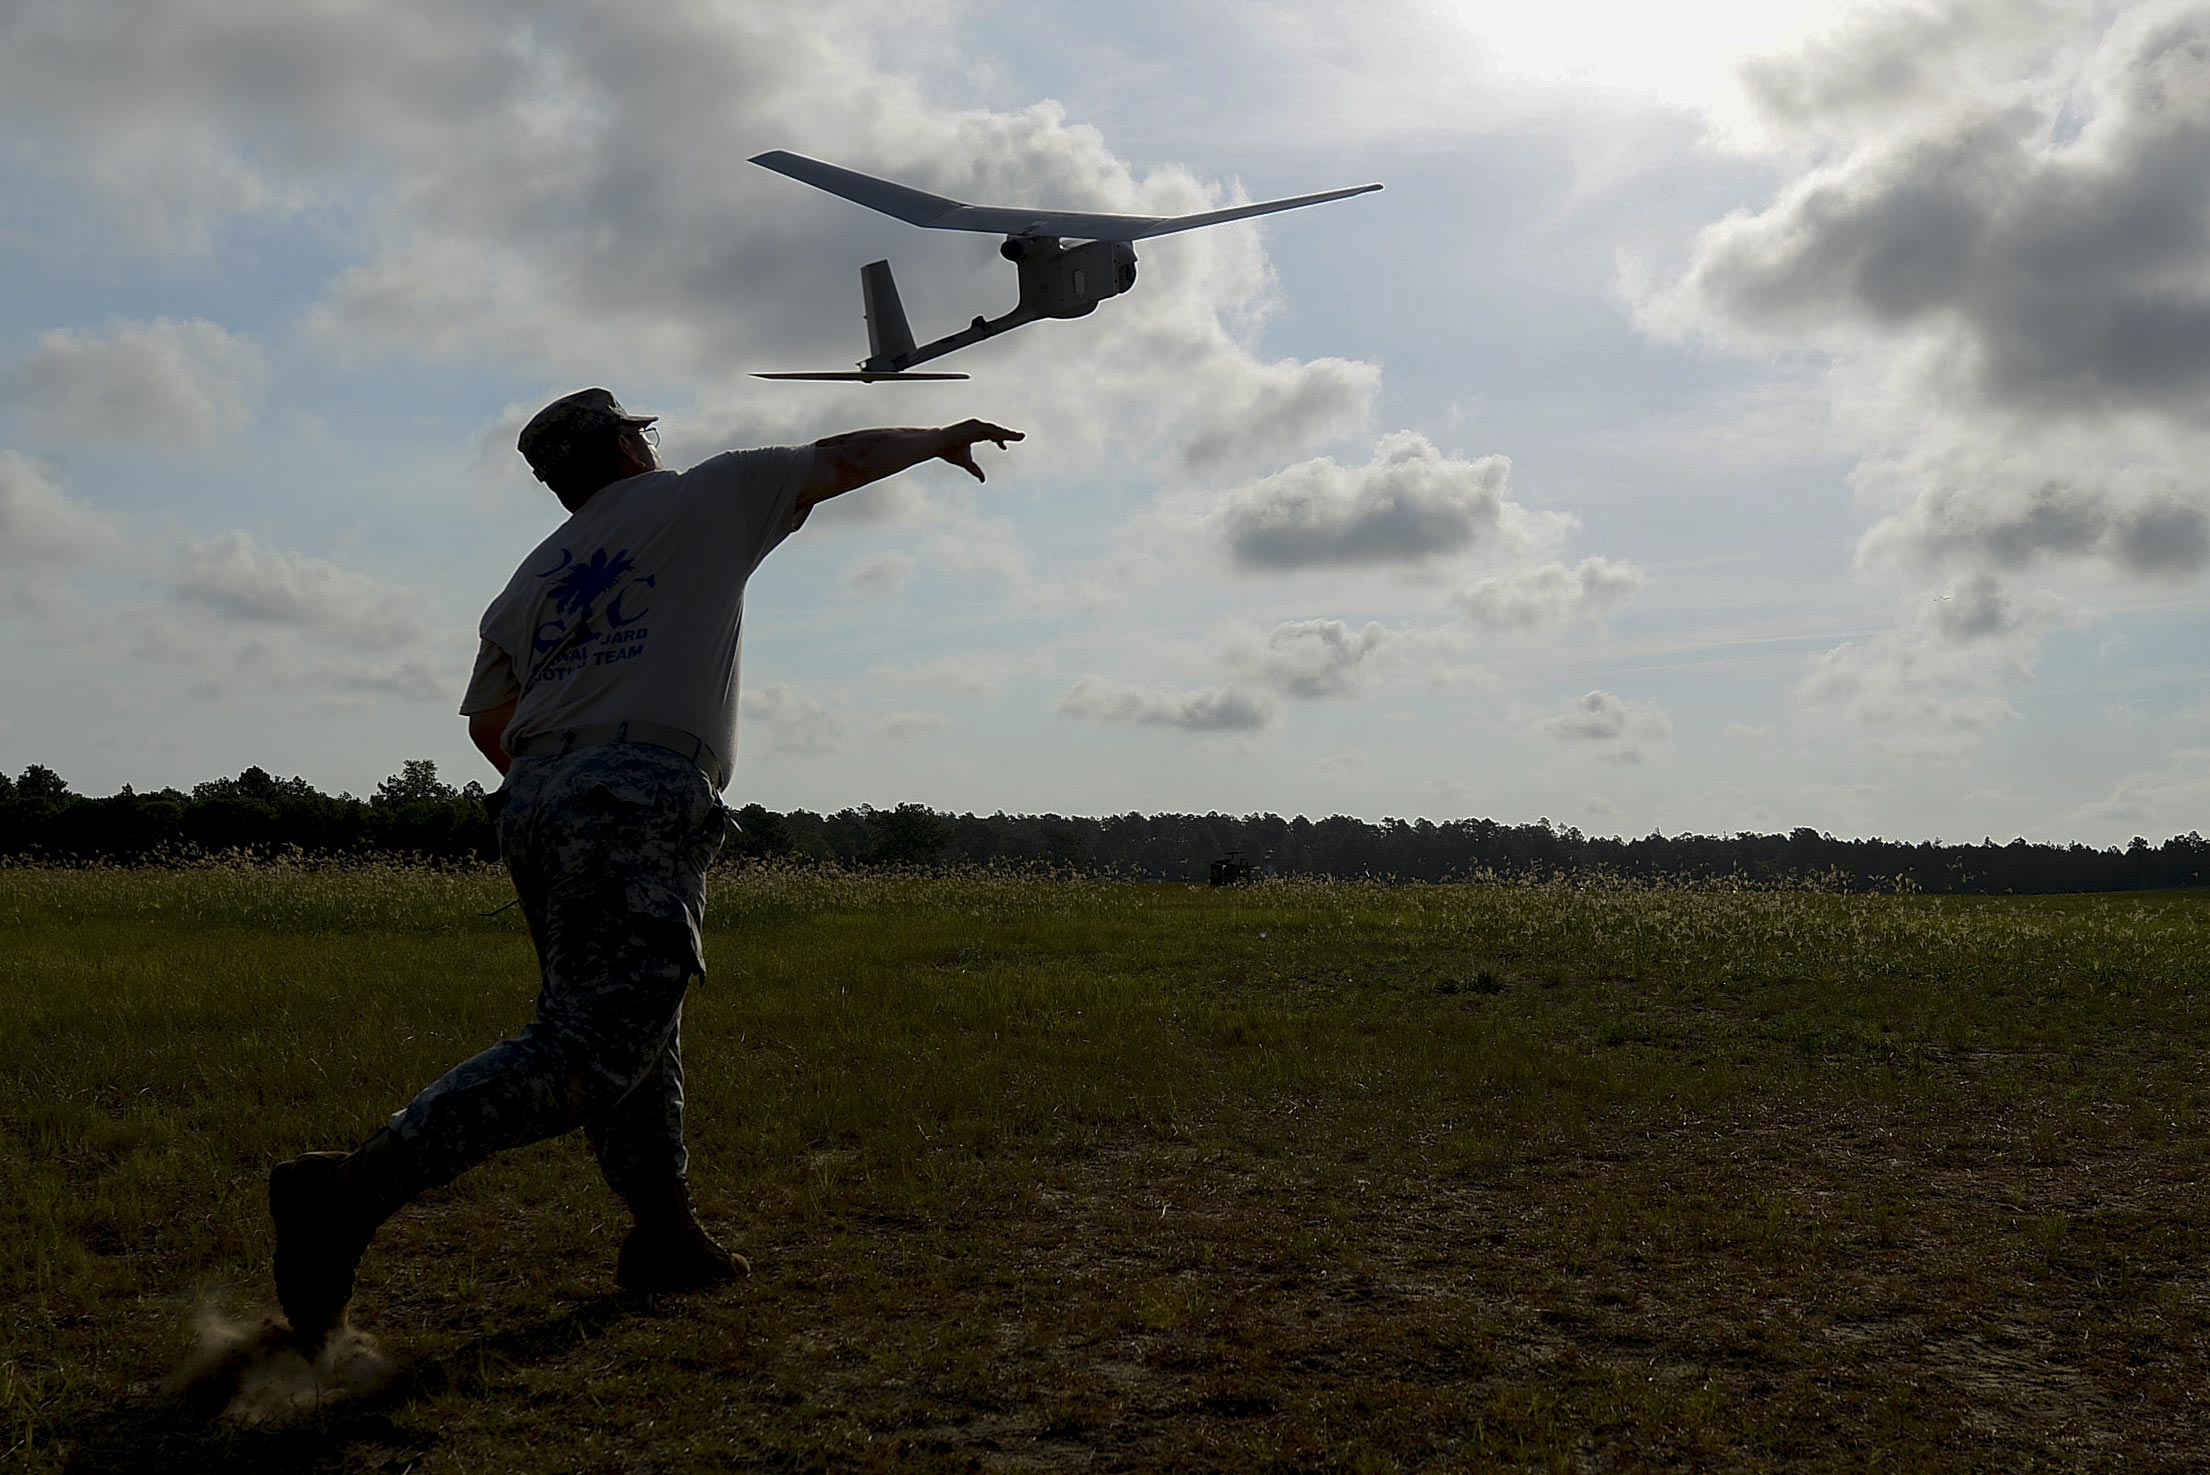 AeroVironment RQ-11B Raven drone launch